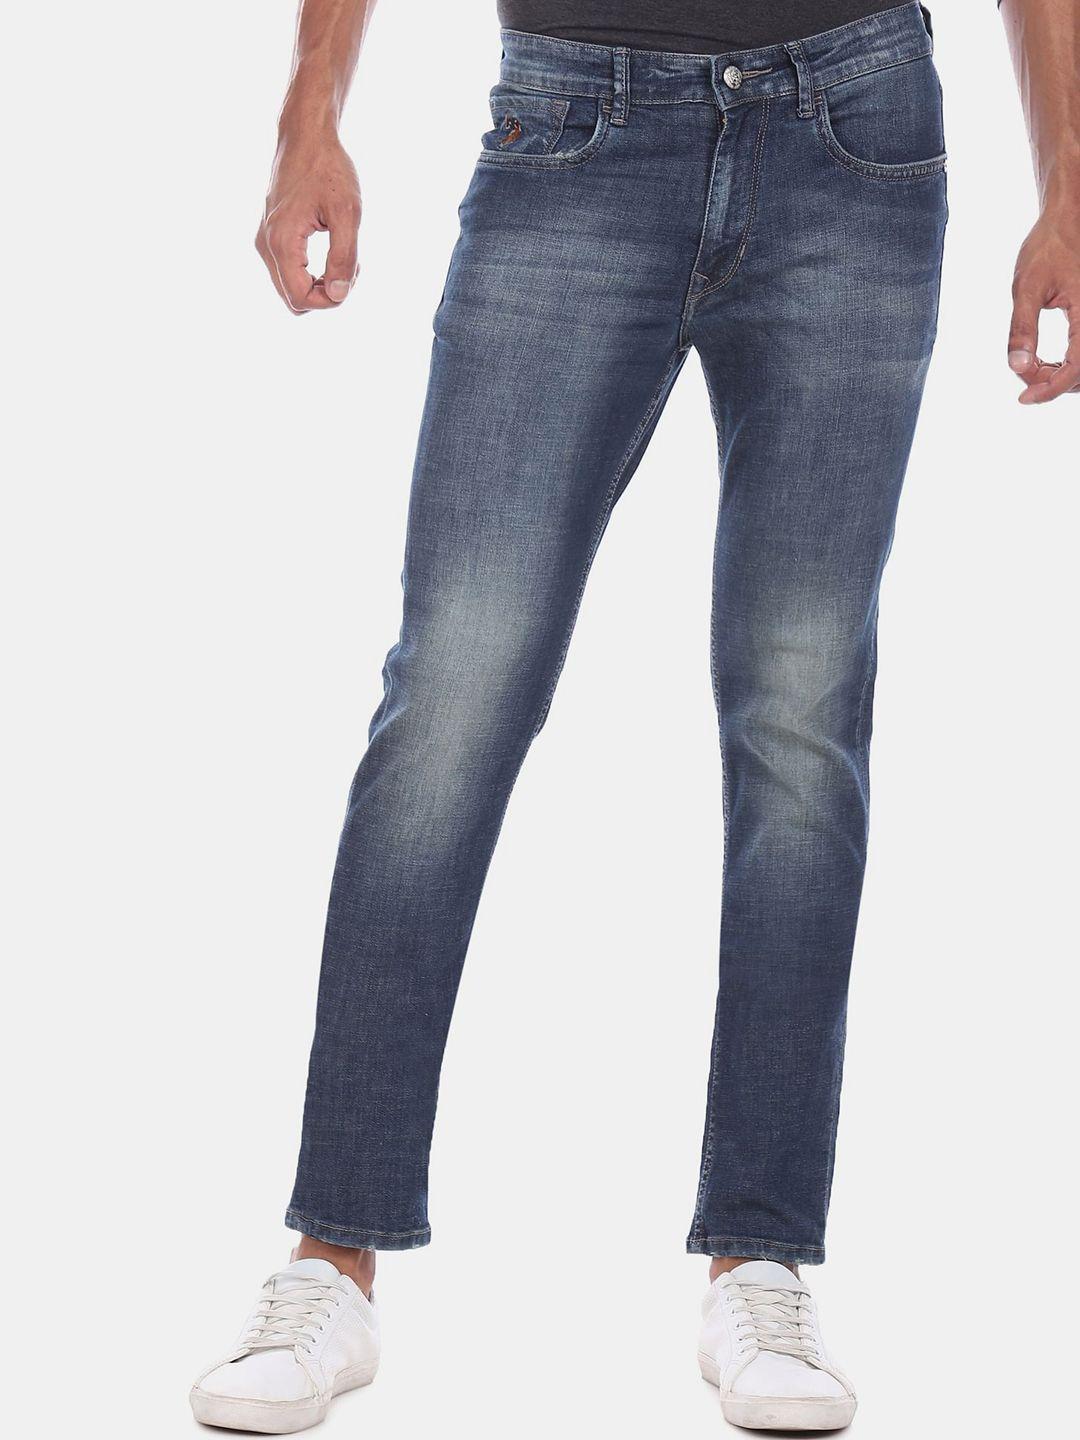 u.s. polo assn. denim co. men blue slim fit mid-rise clean look stretchable jeans